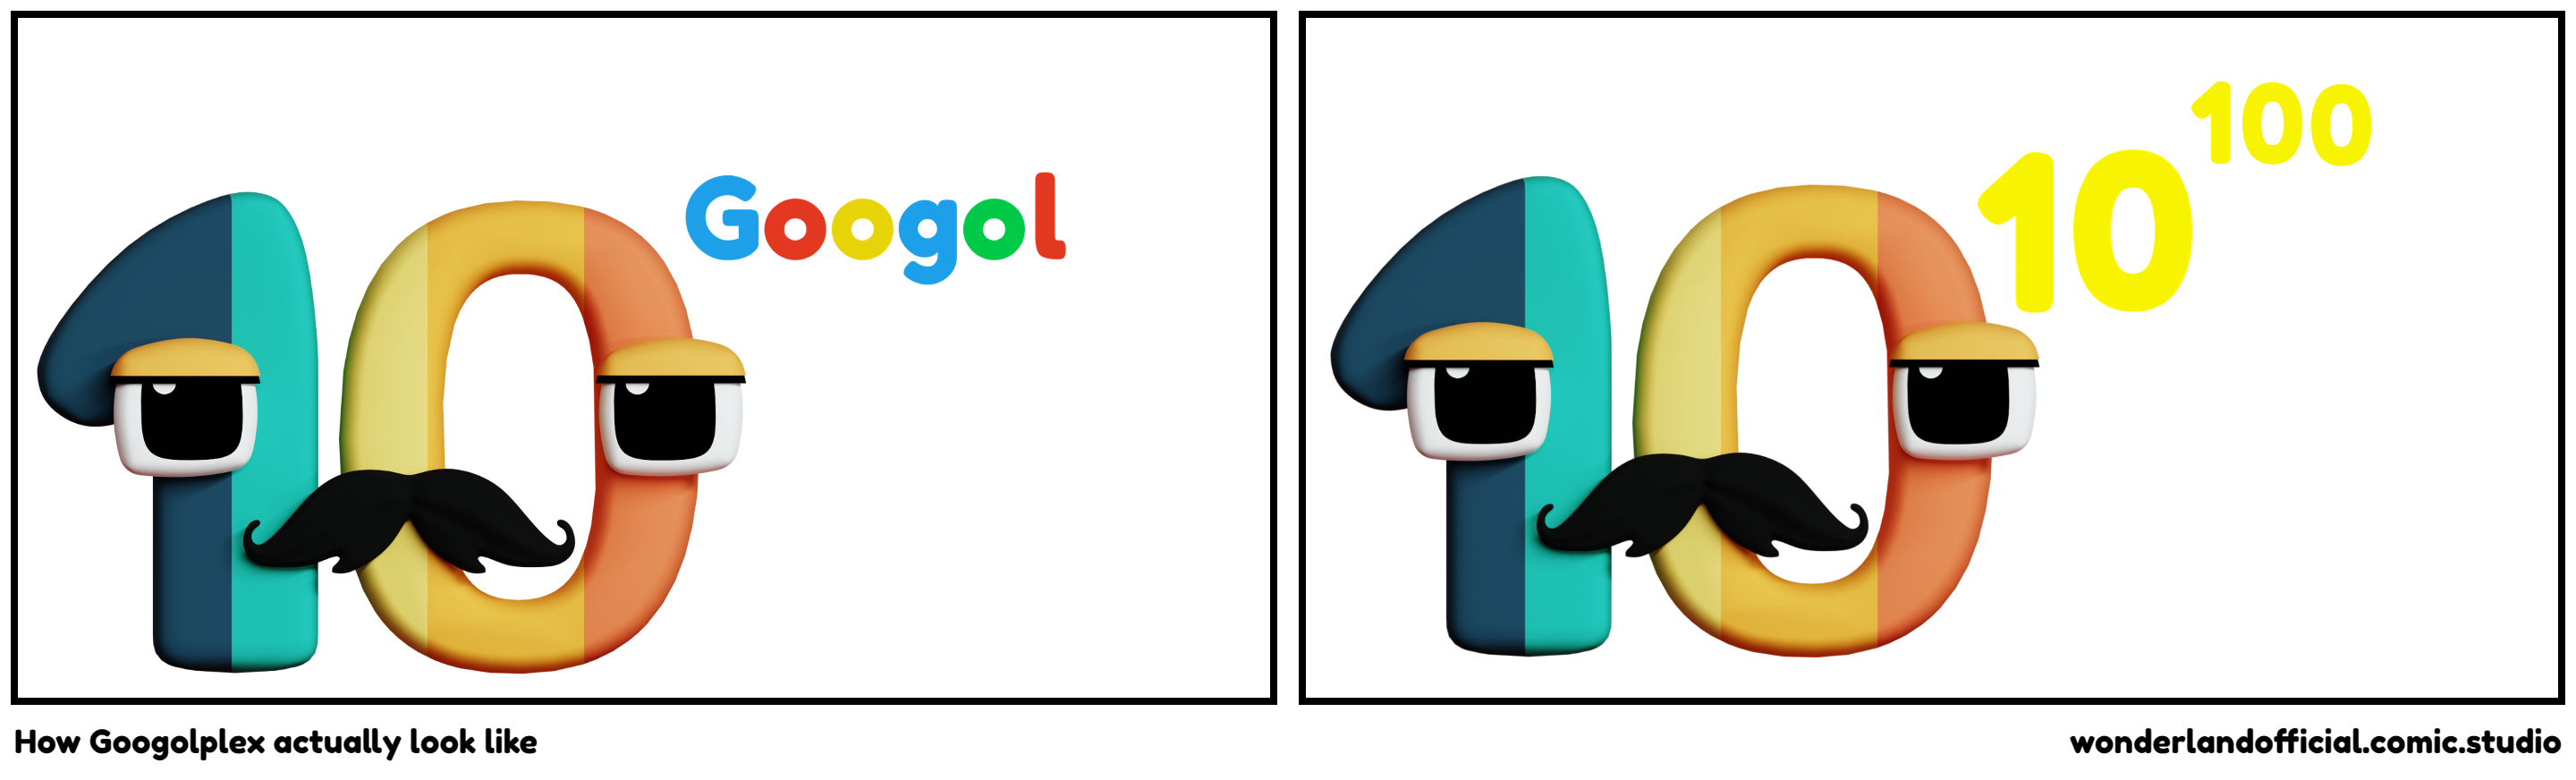 How Googolplex actually look like